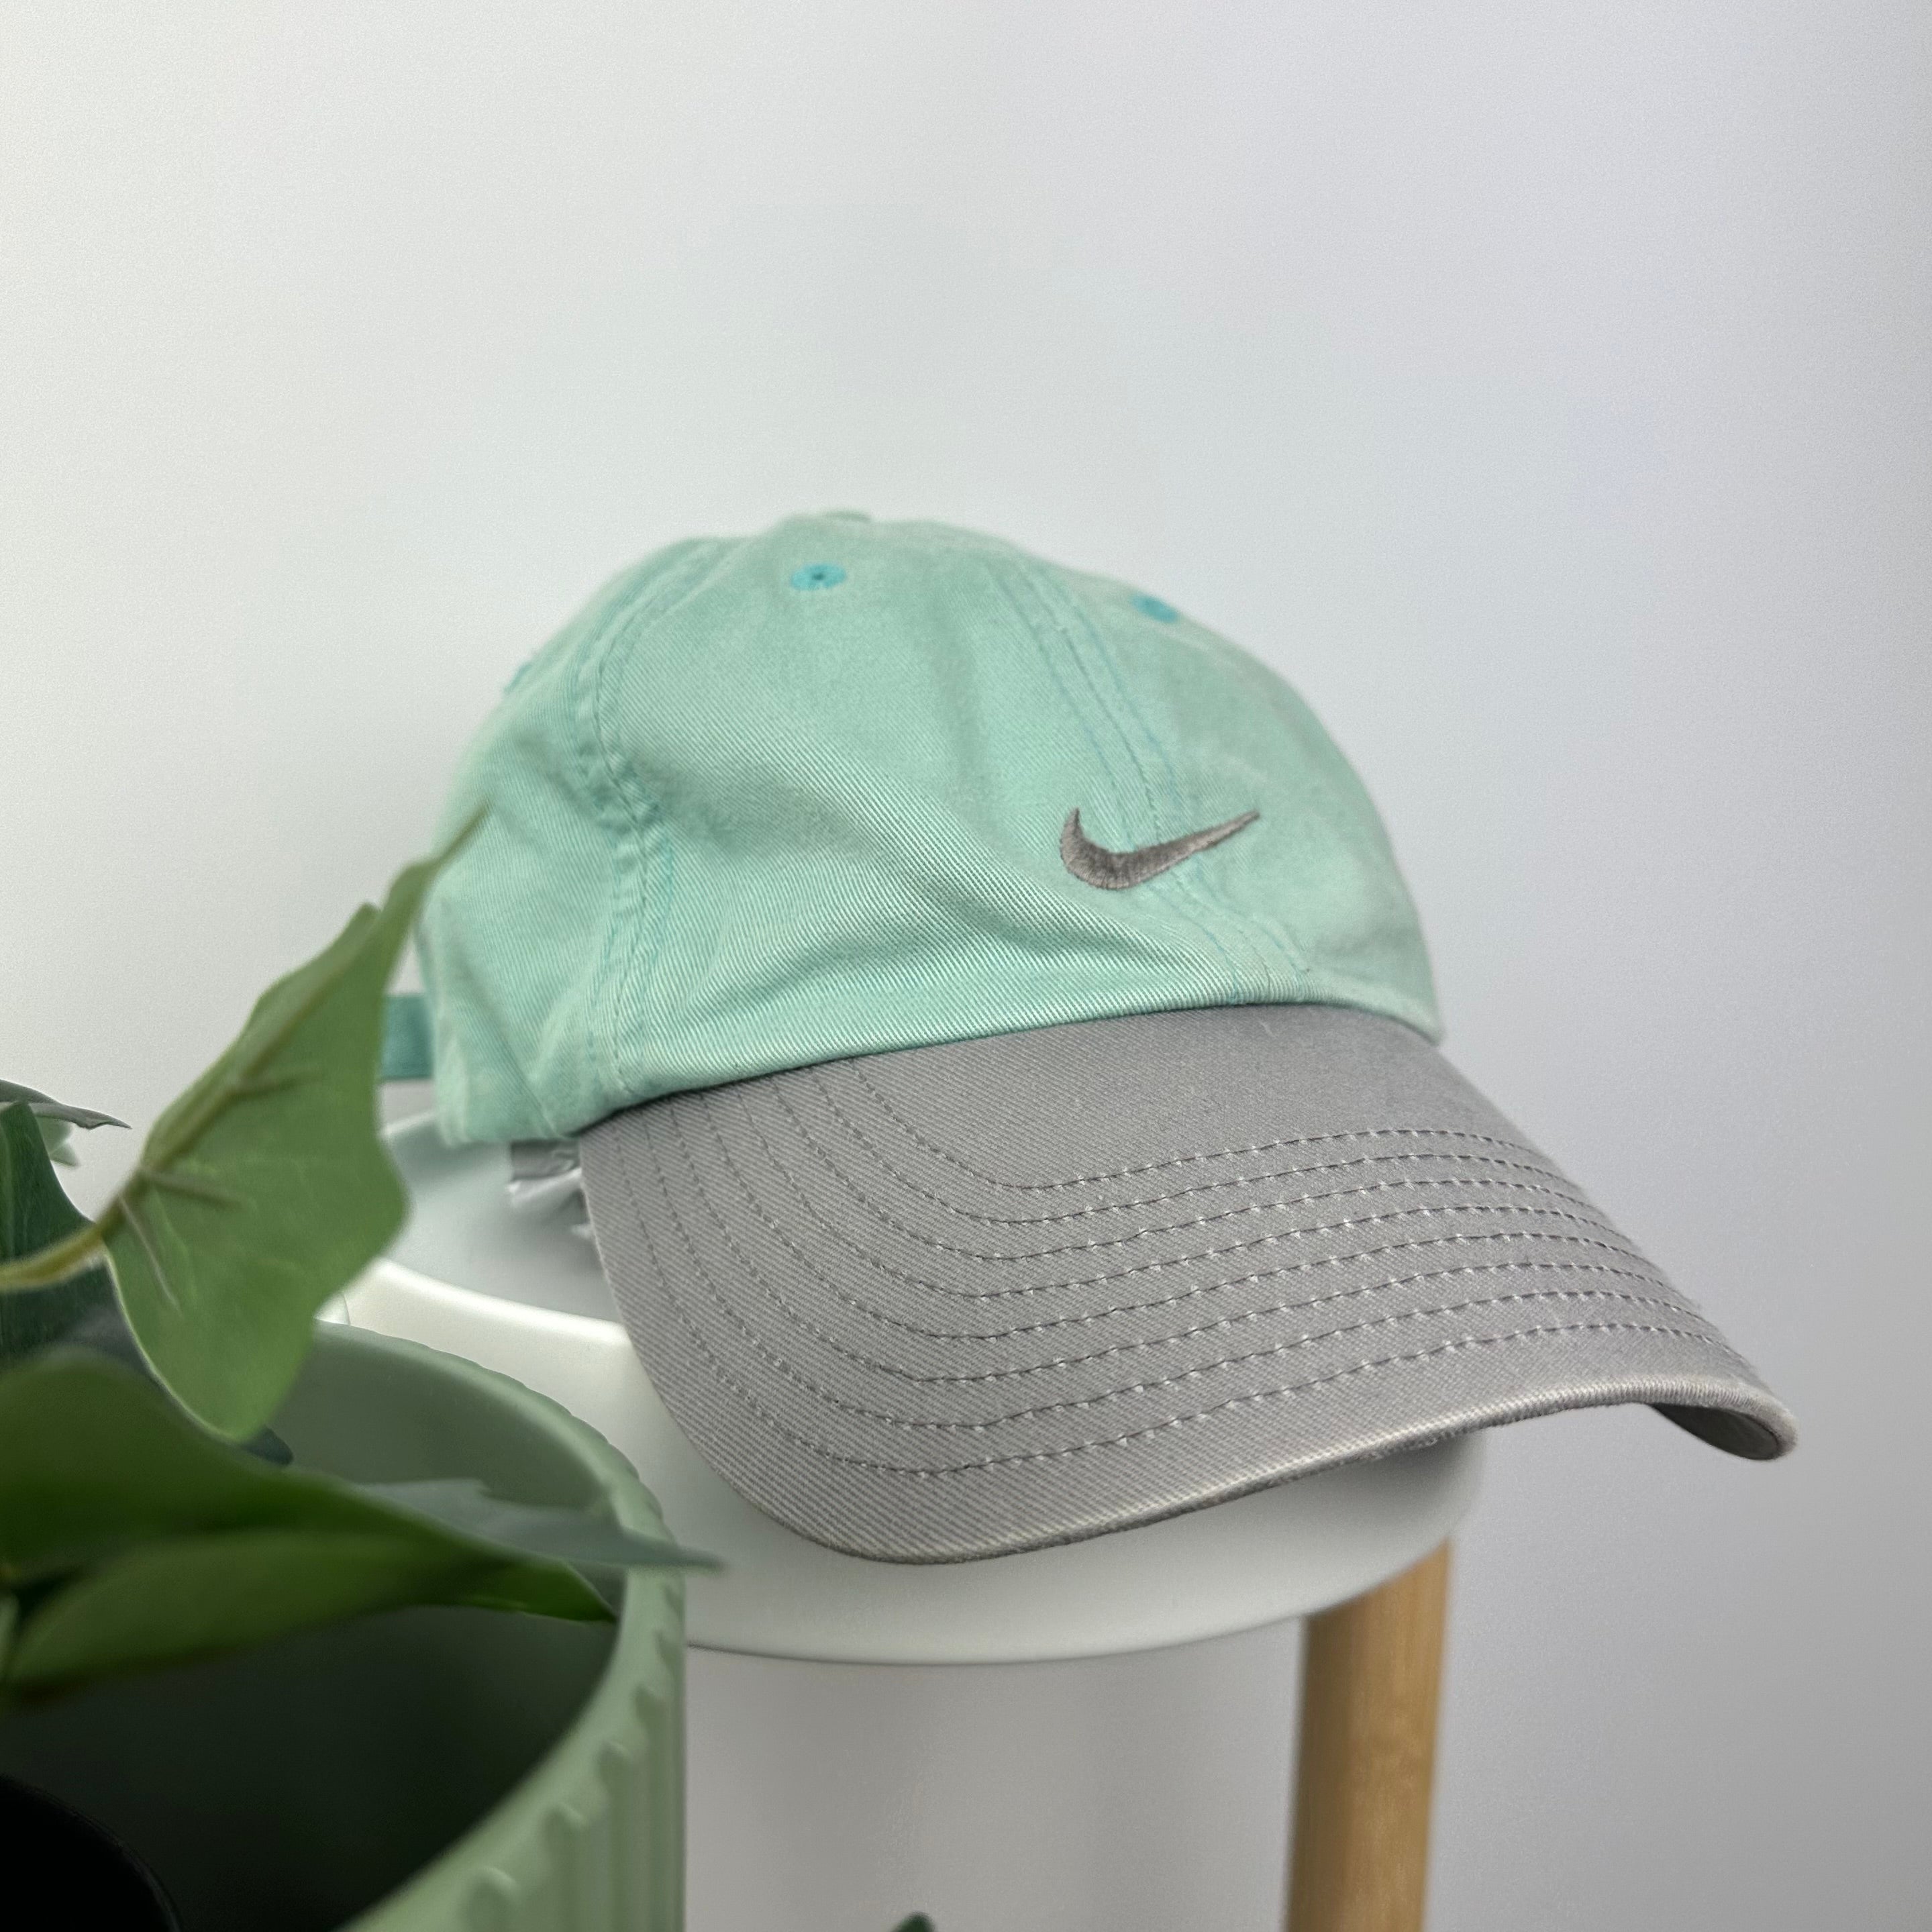 Nike Cap In Turquoise